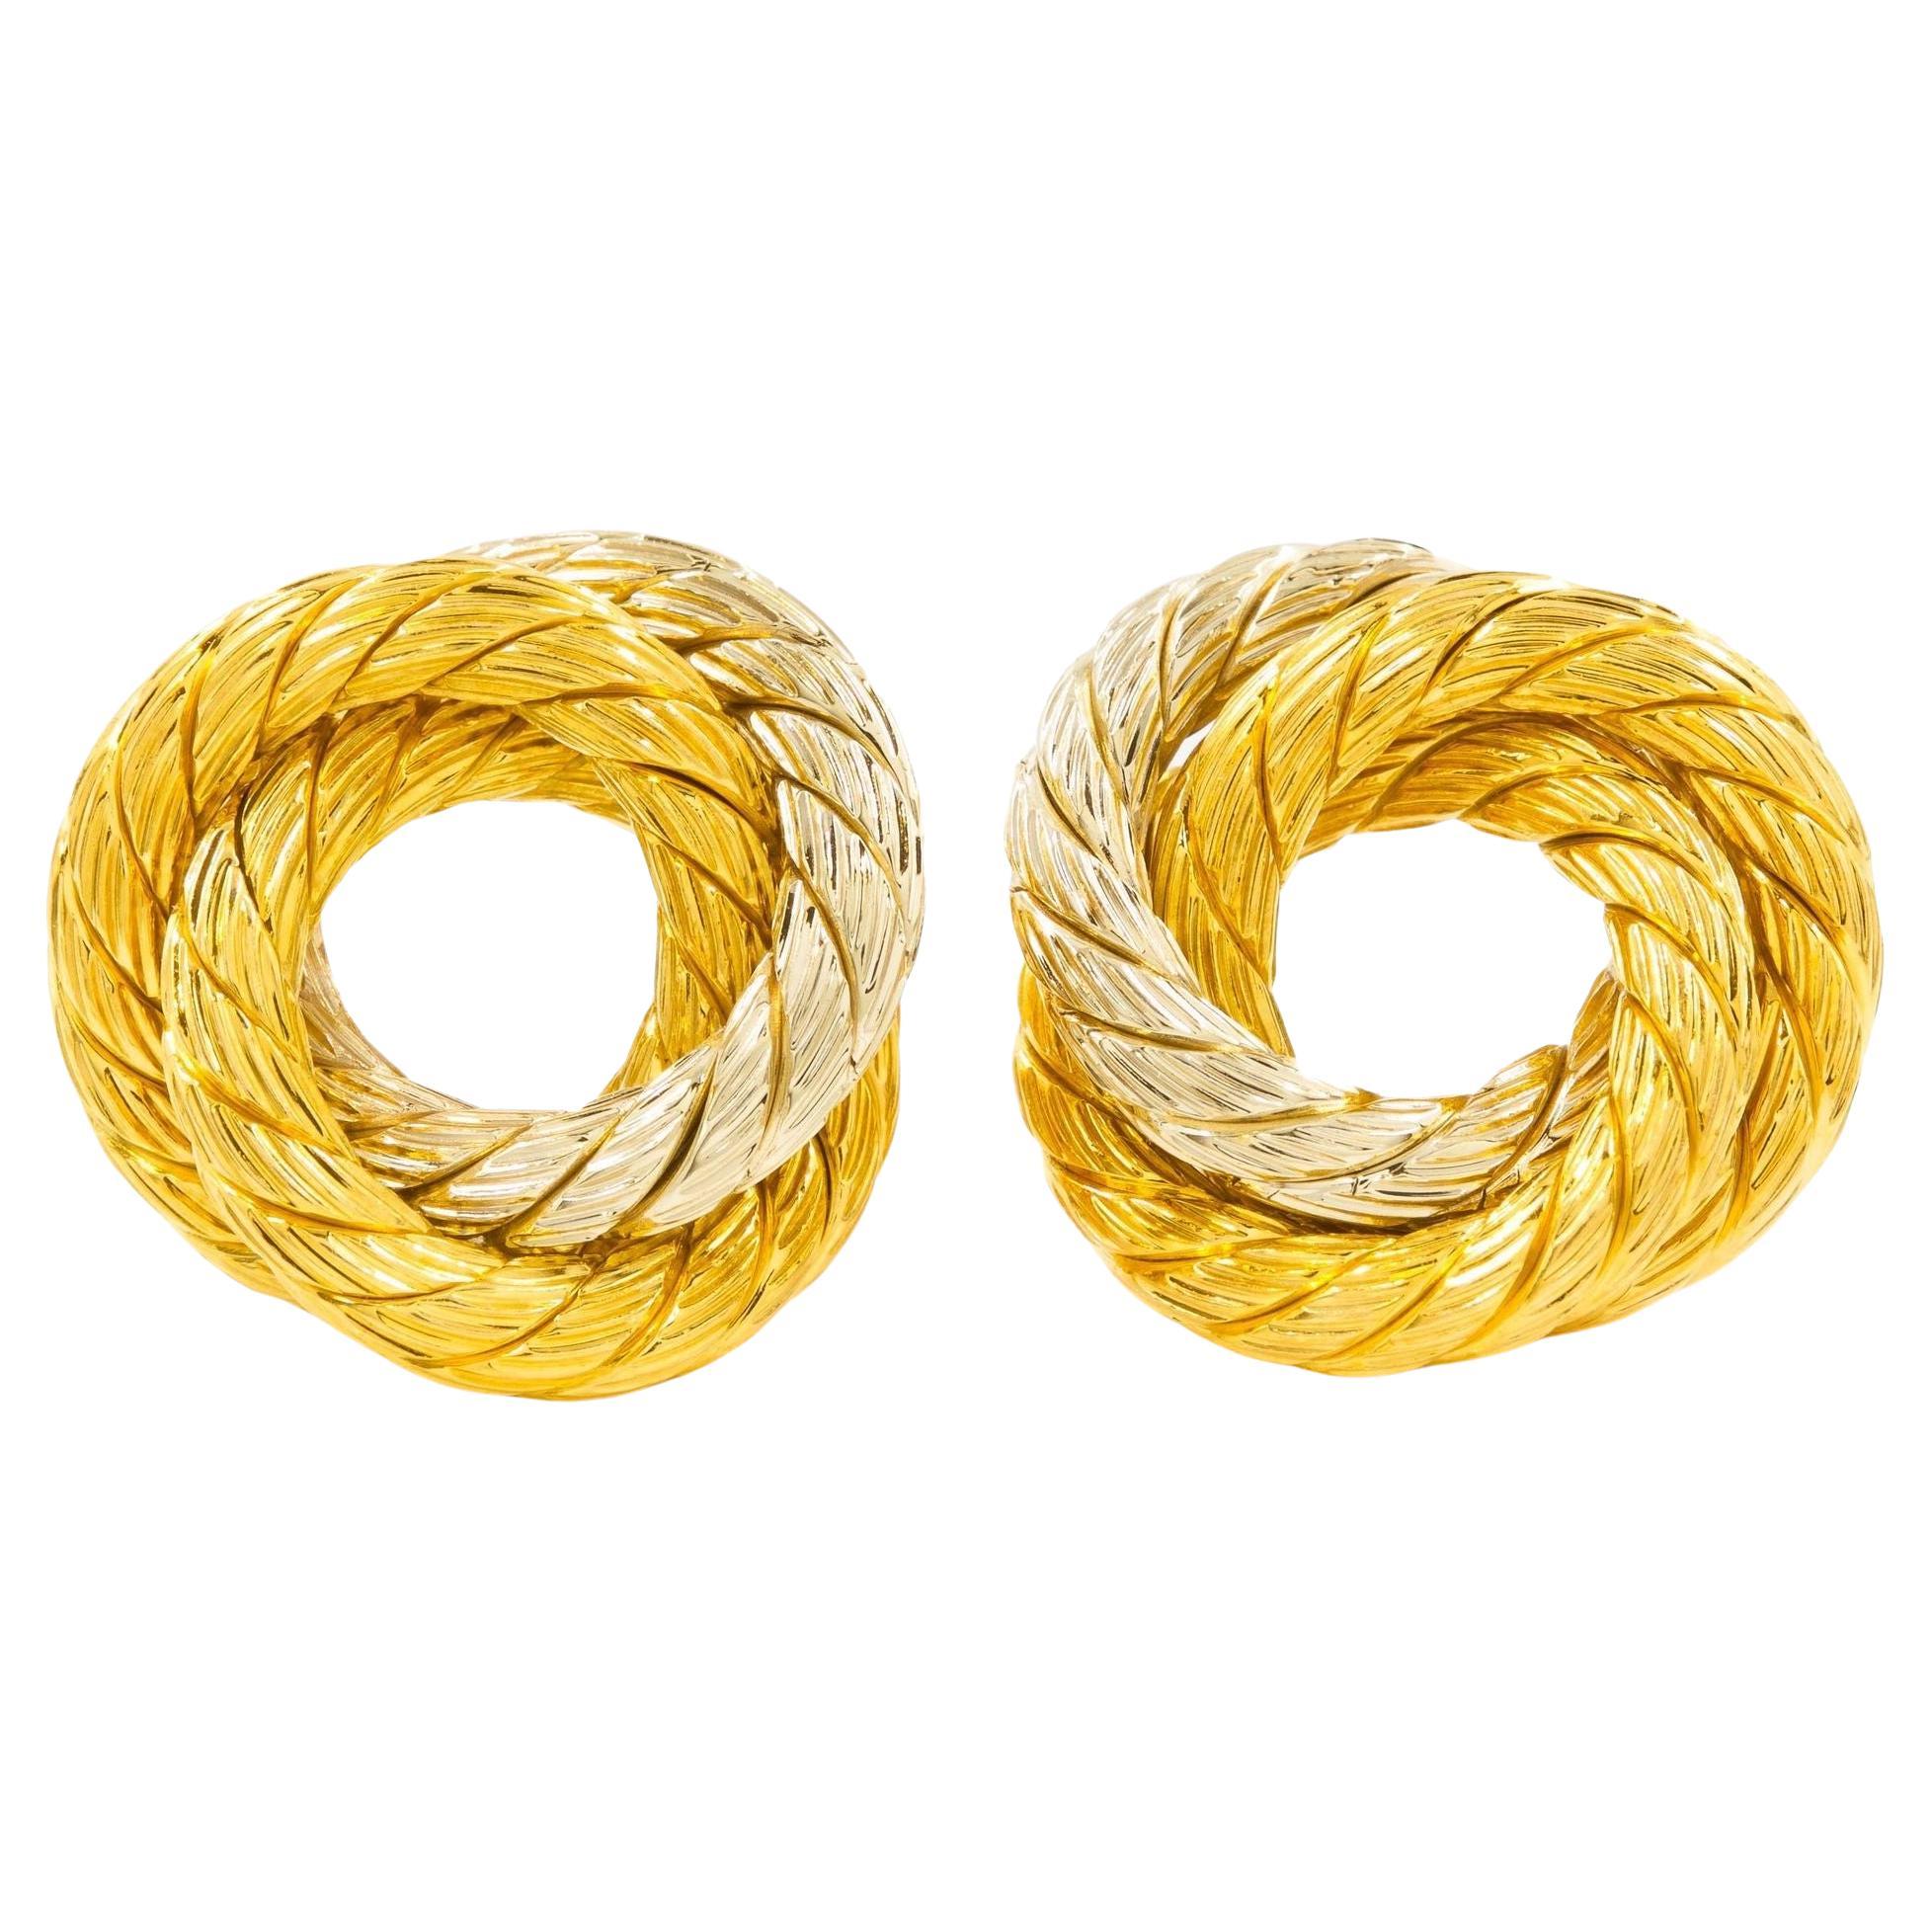 Vintage Italian Swirling and Woven 18k Gold Earrings